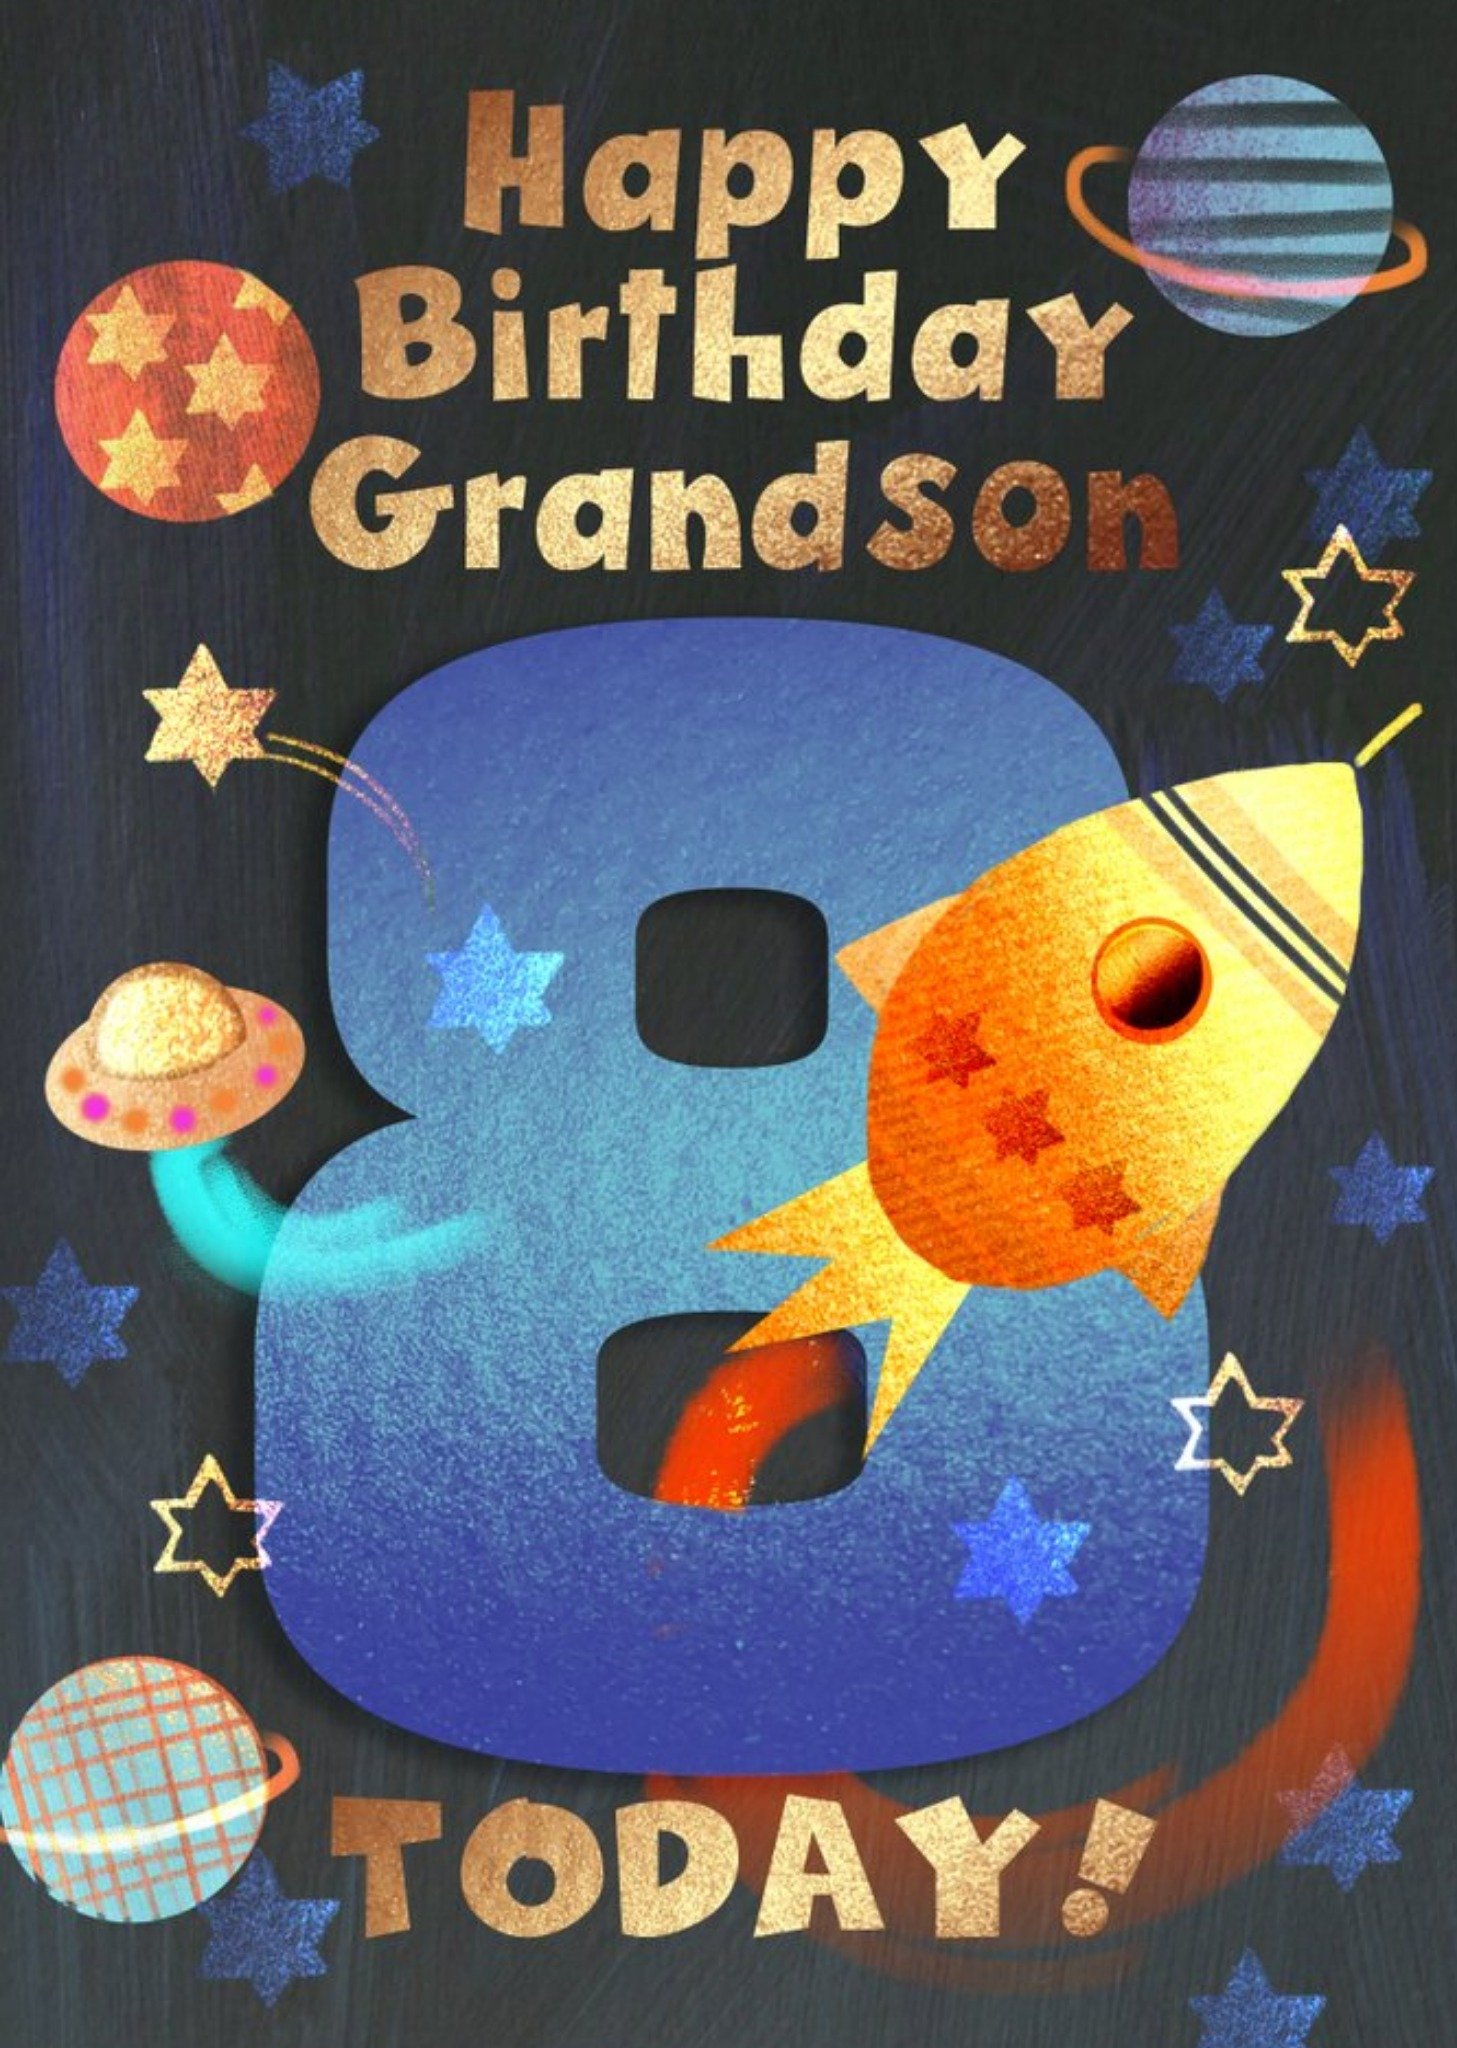 Moonpig Rocket Ship Happy Birthday Grandson 8 Today Birthday Card, Large